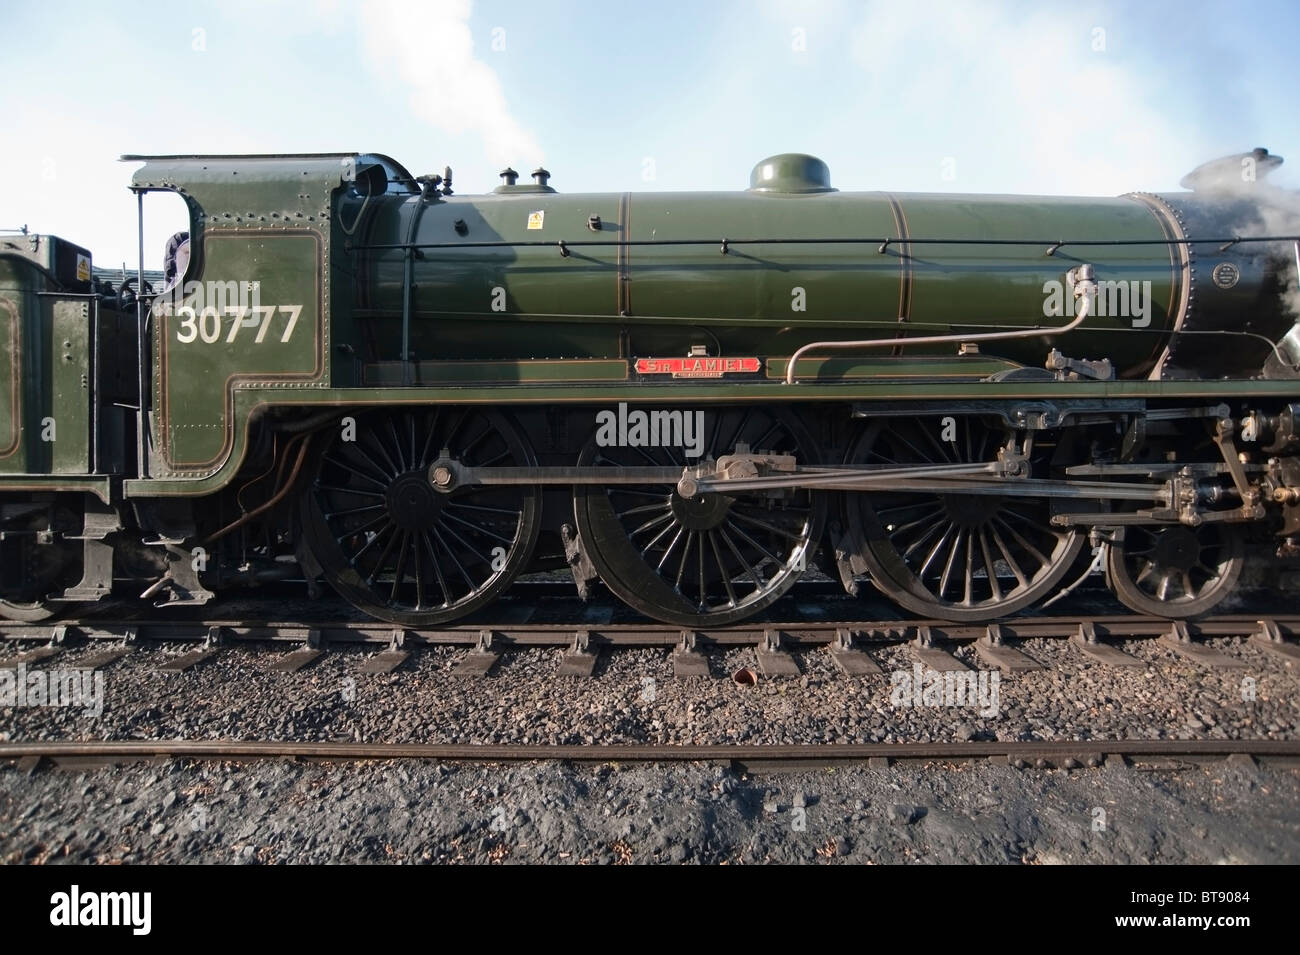 Sir Lamiel, N15 Classe, Regione meridionale locomotiva a vapore, Bluebell Railway, Sussex, Inghilterra Foto Stock